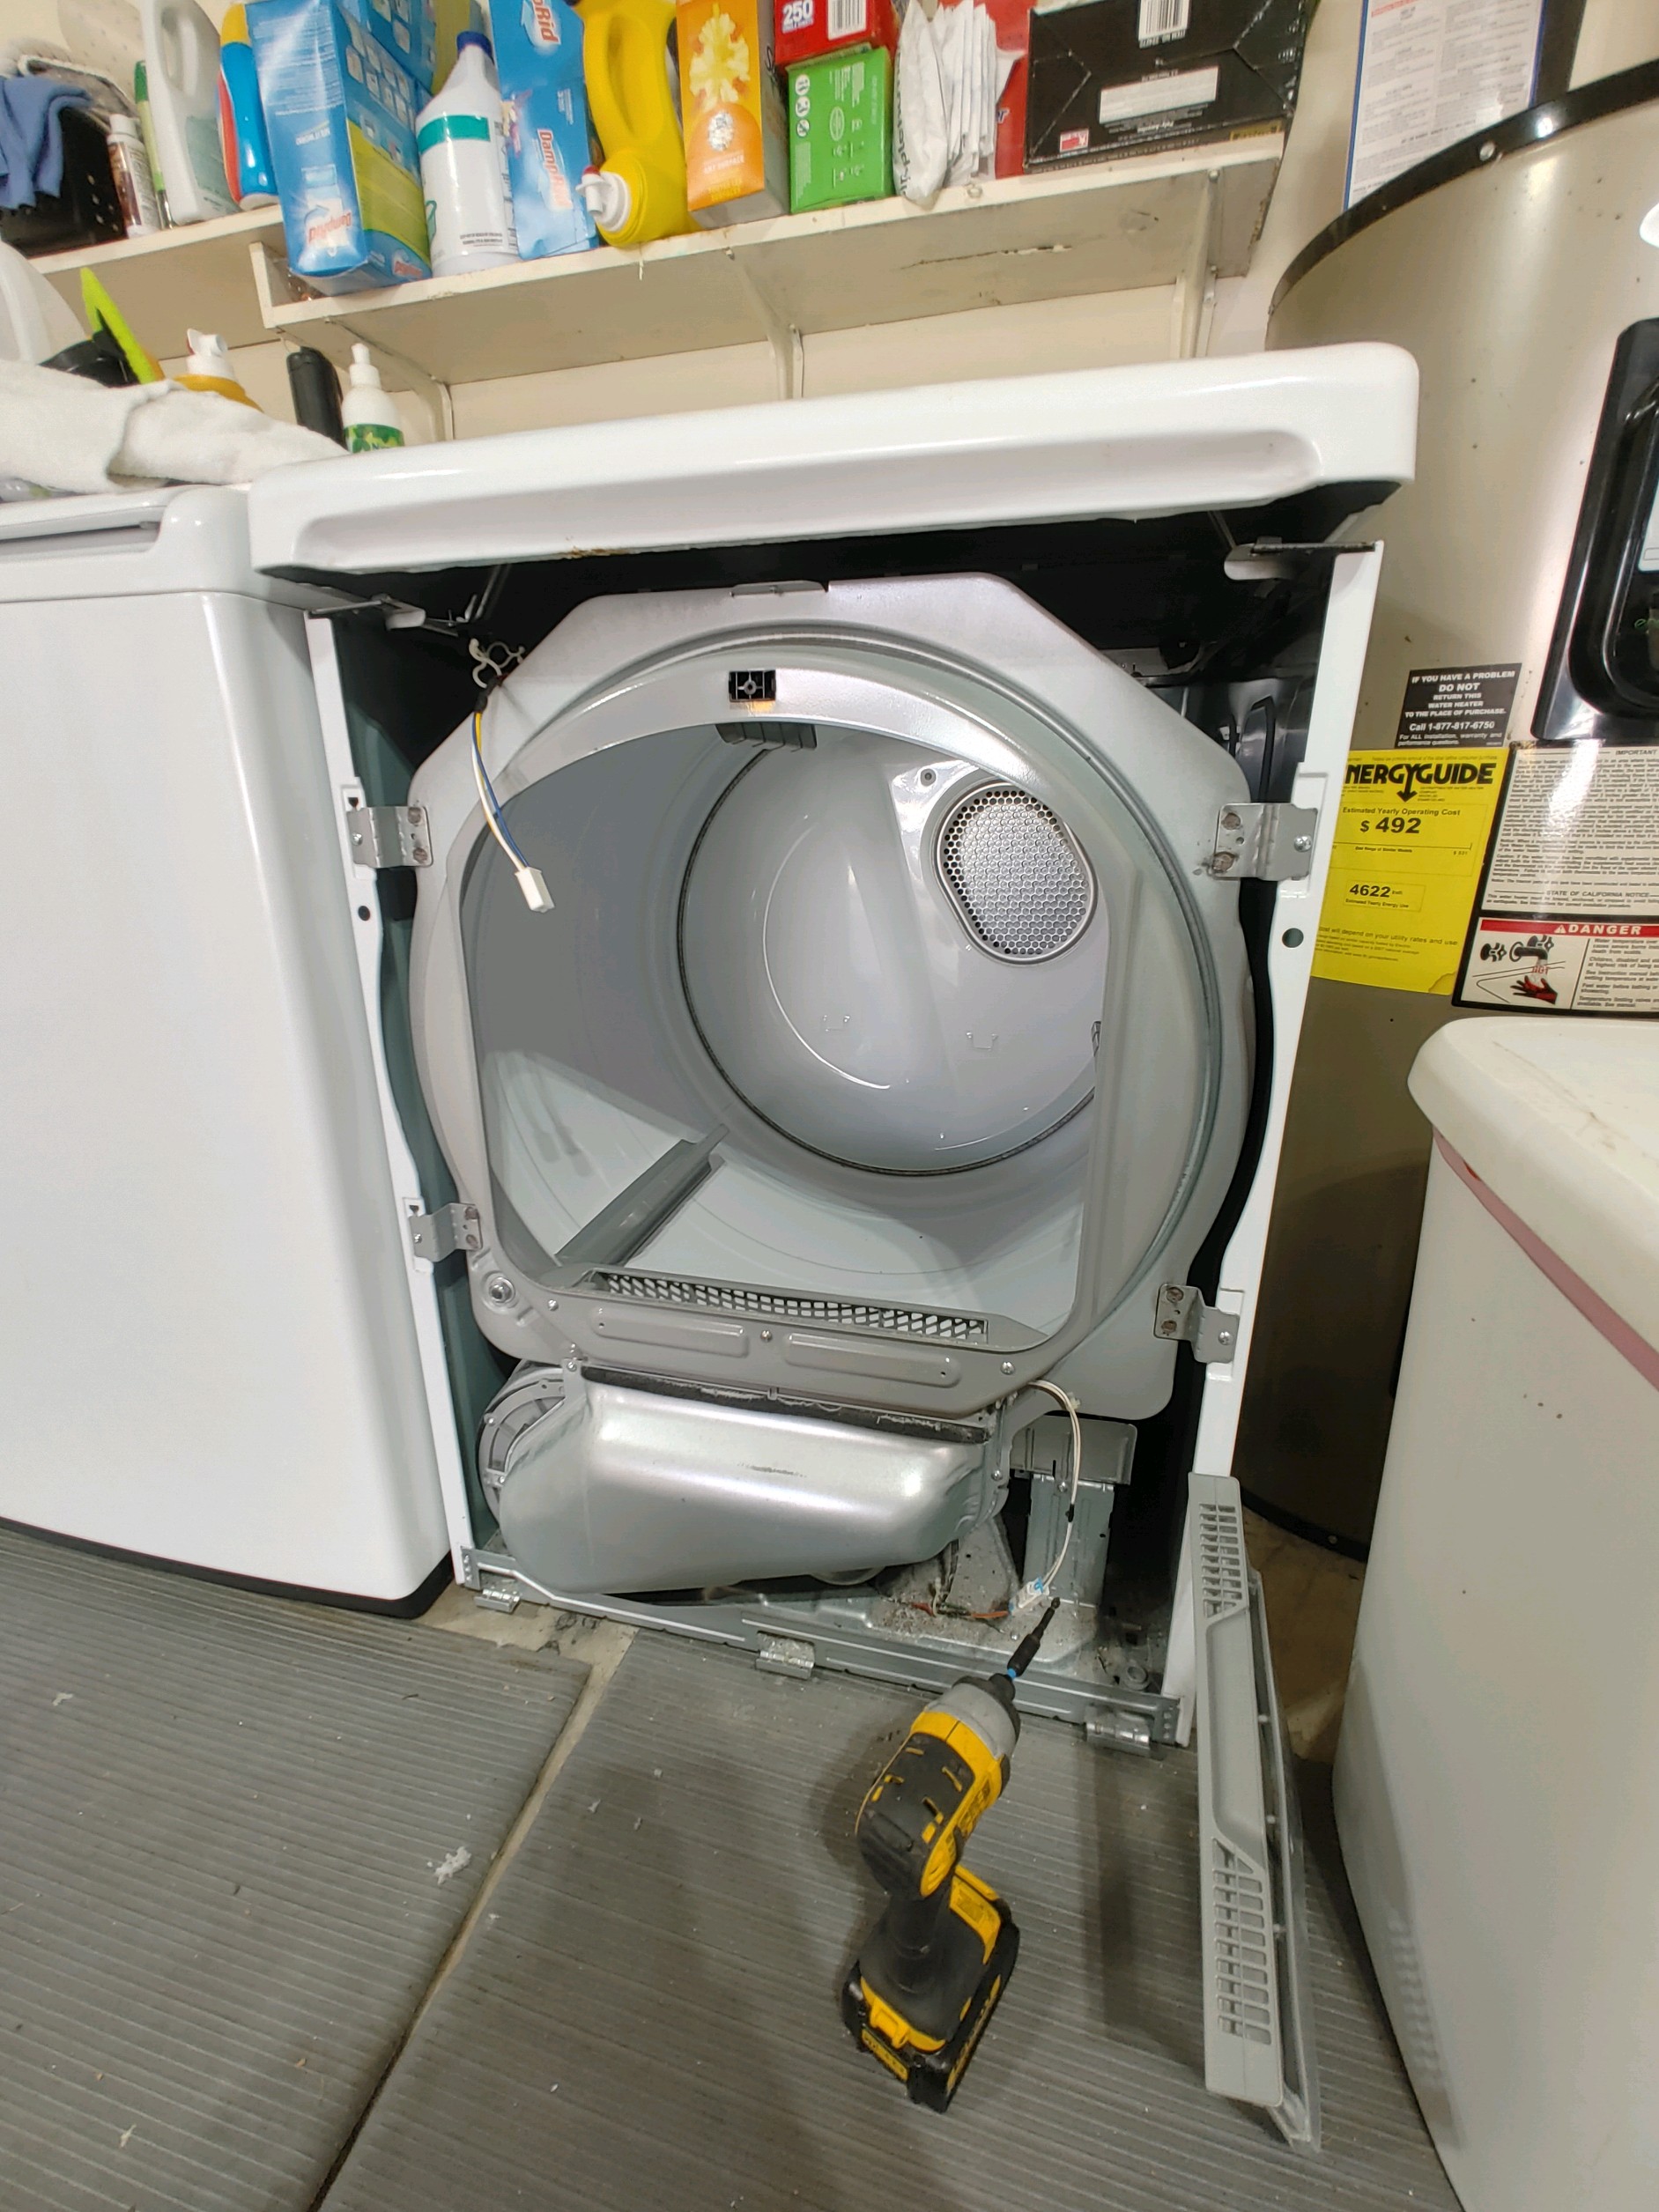 appliance reapir dryer repair removed clothing stuck in dryer chantry street orlovista orlando fl 32835